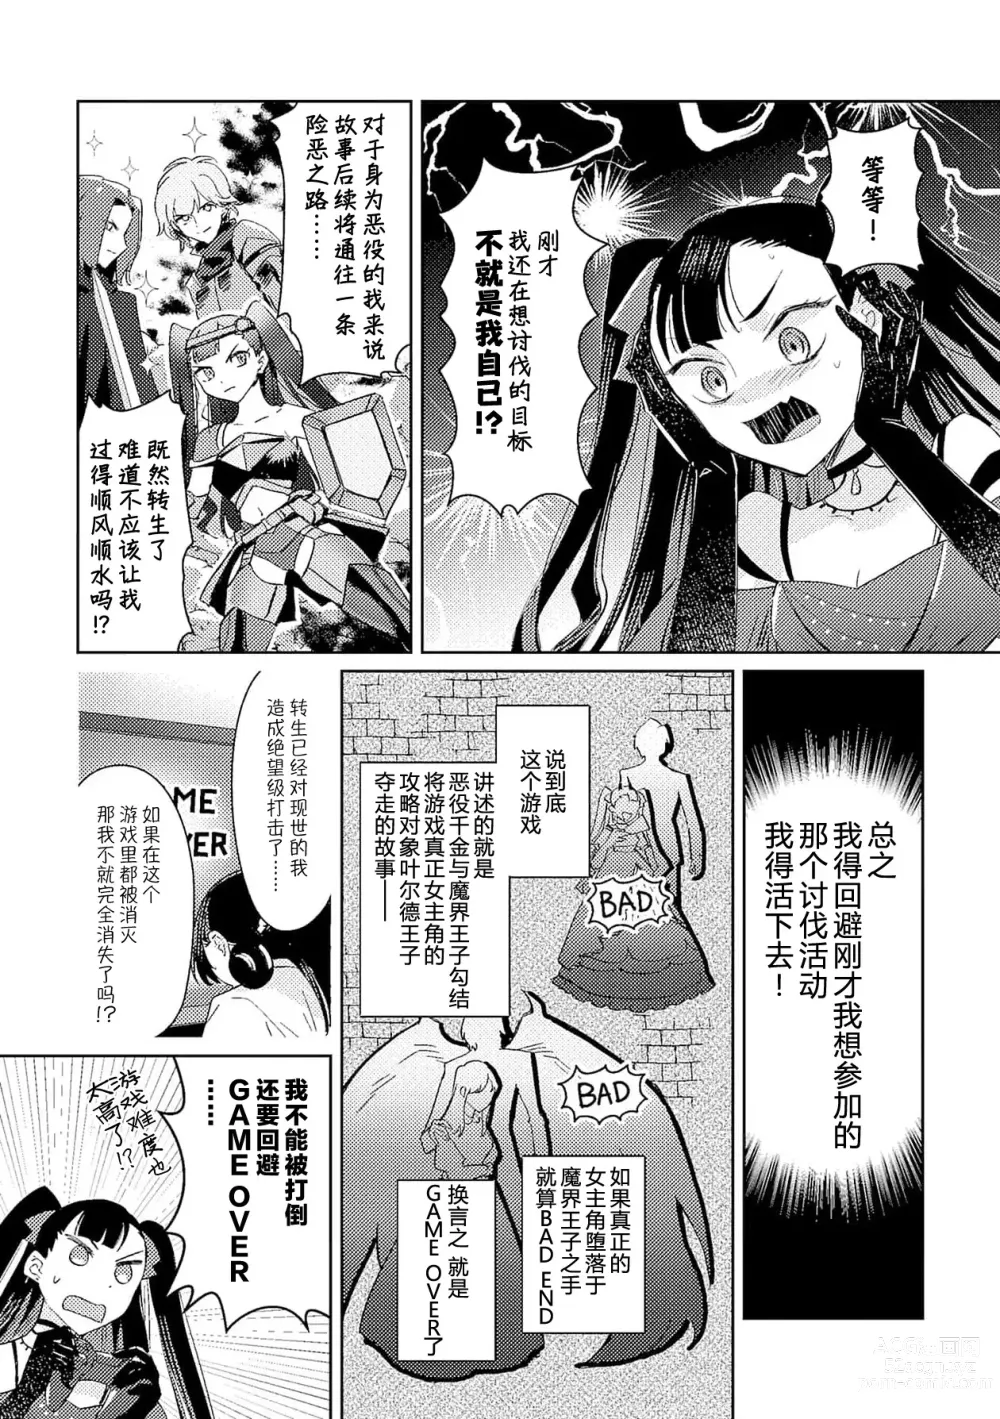 Page 7 of manga 身为恶役千金，堕落于魔界王子身下这条路线真的可以有？ 1-7